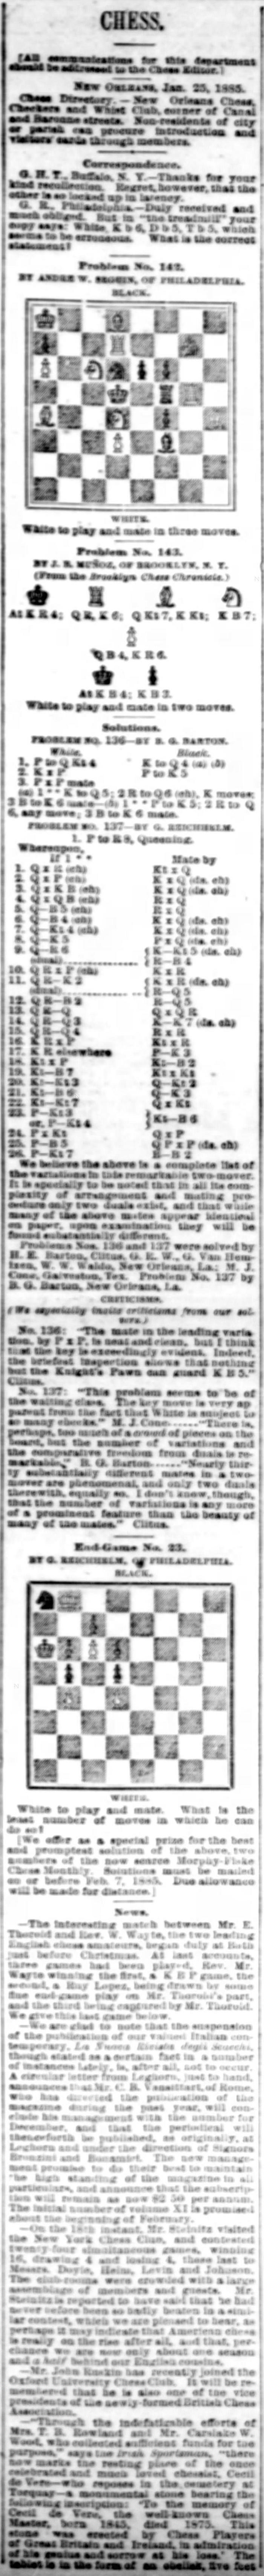 1885.01.25-01 New Orleans Times-Democrat.jpg